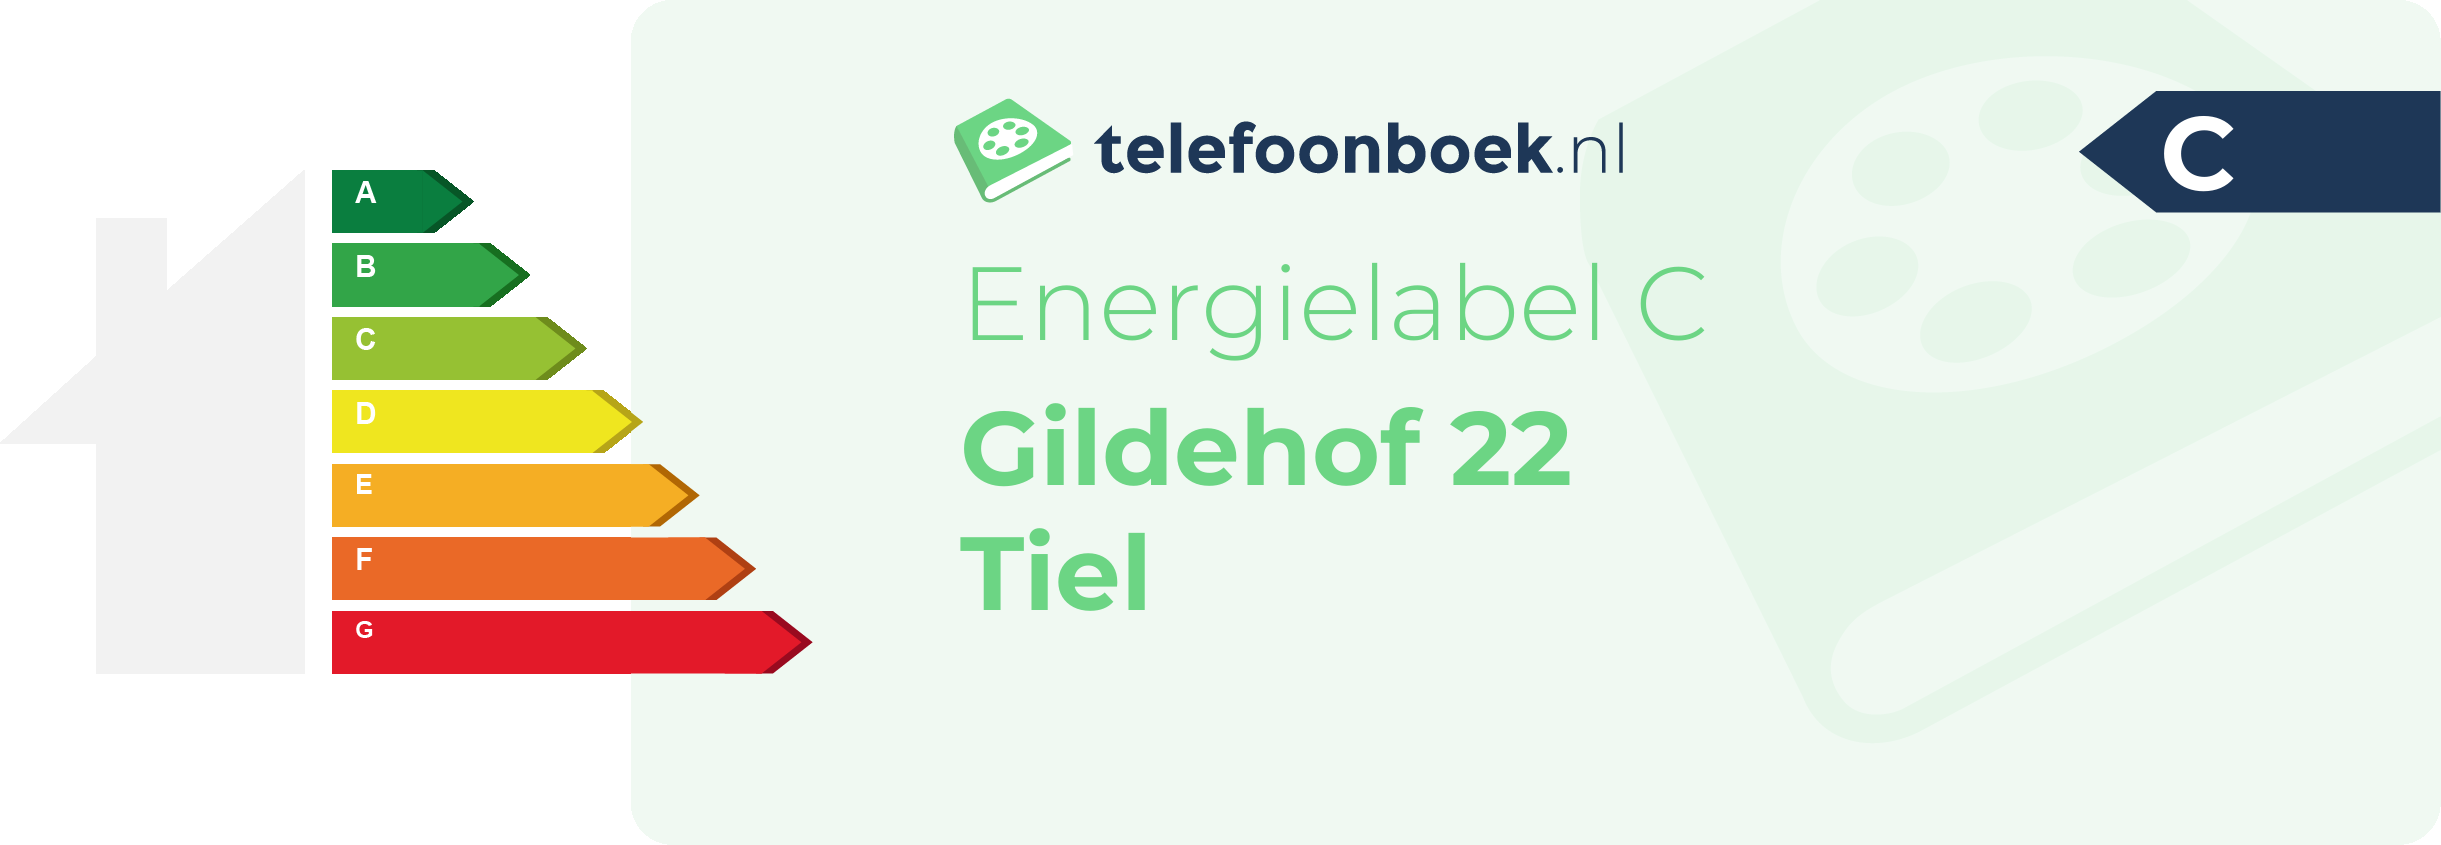 Energielabel Gildehof 22 Tiel